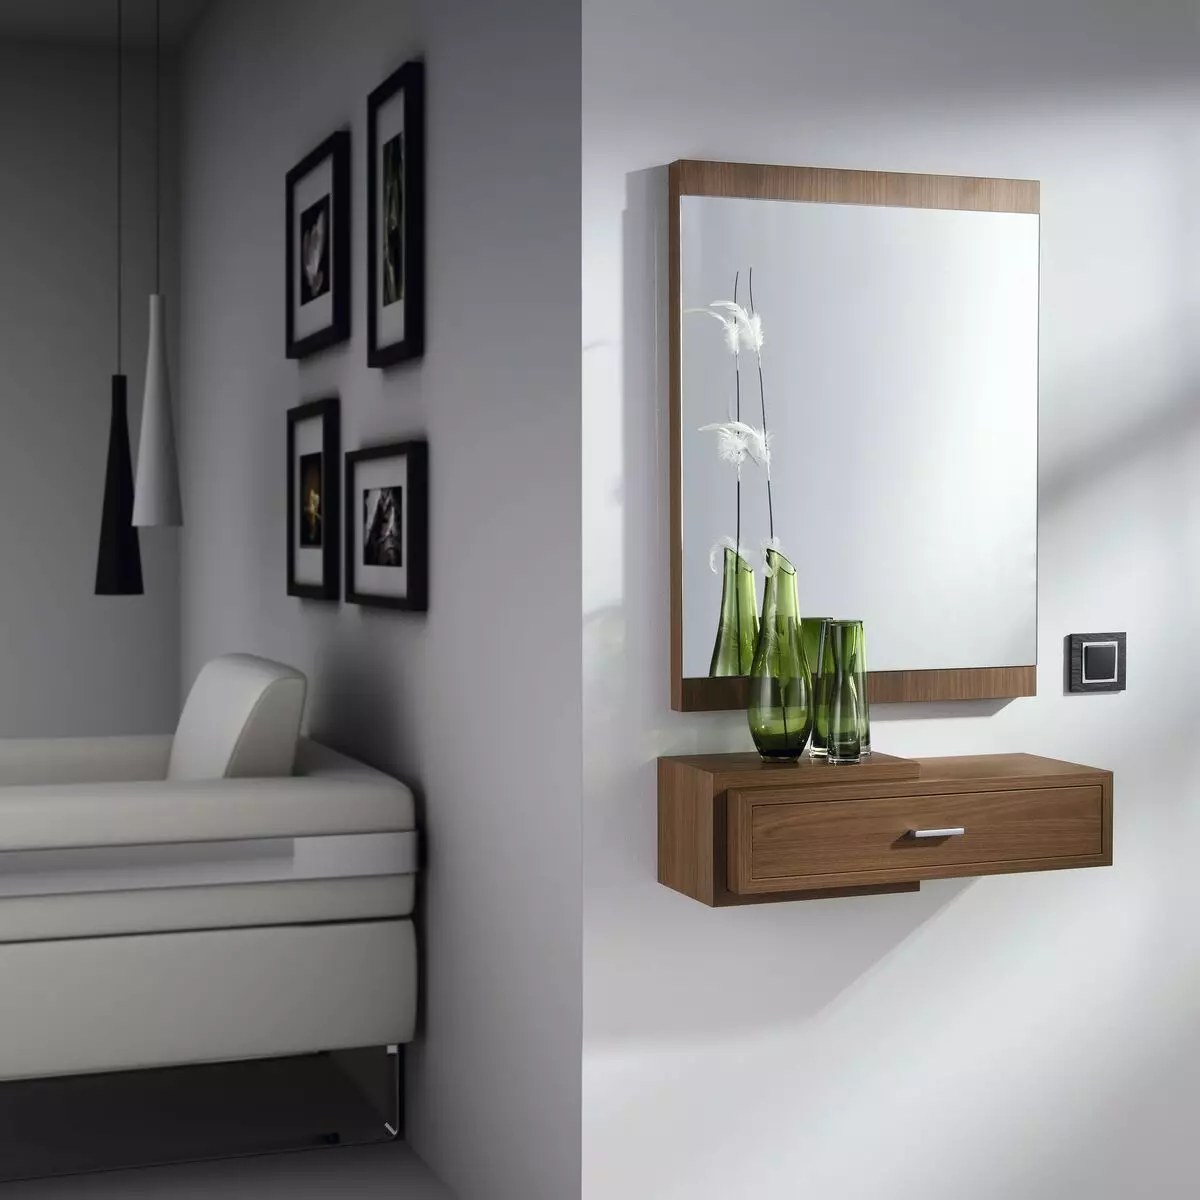 Cermin dengan rak di lorong: dinding dan cermin lantai. Bagaimana untuk memilih yang dipasang atau cermin lain dengan rak? 9300_16